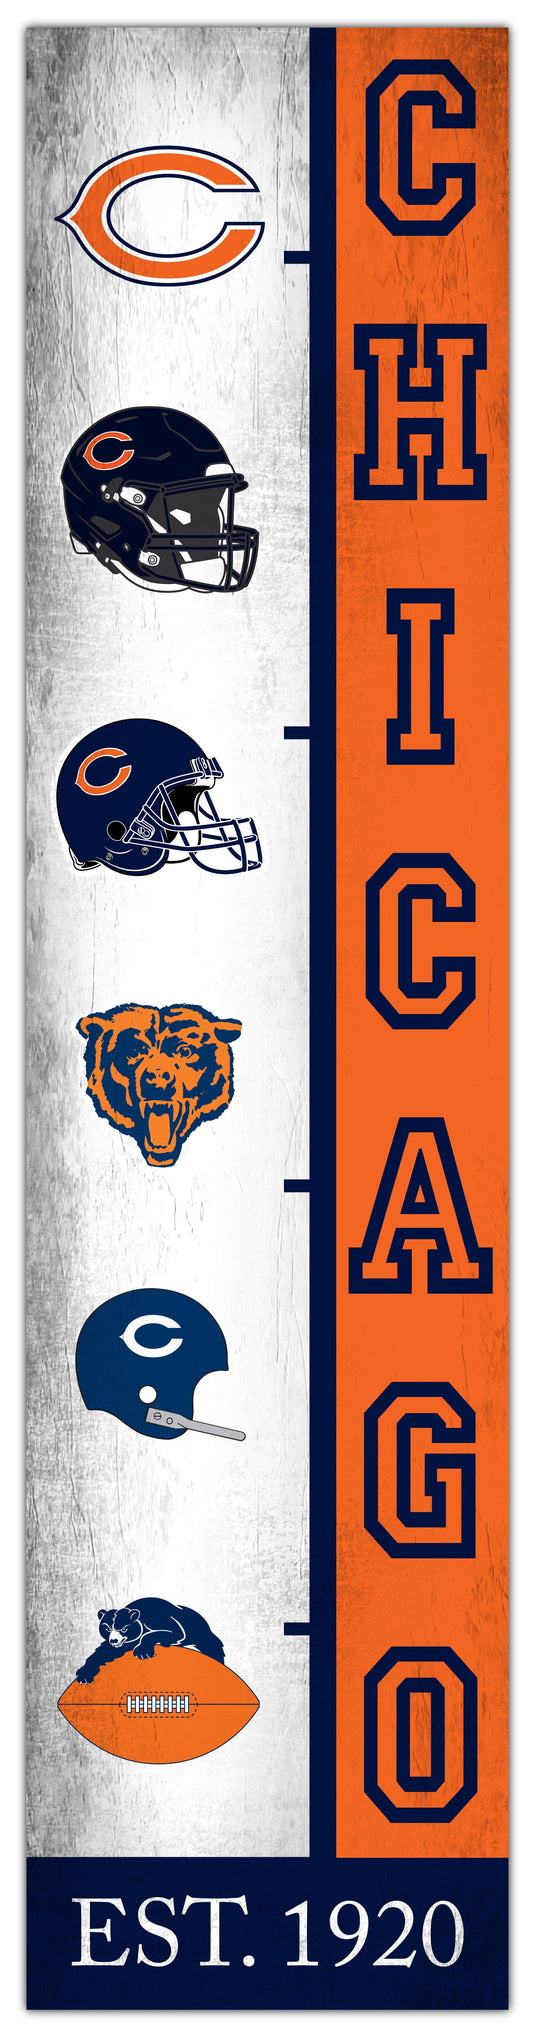 Fan Creations Home Decor Chicago Bears Team Logo Progression 6x24